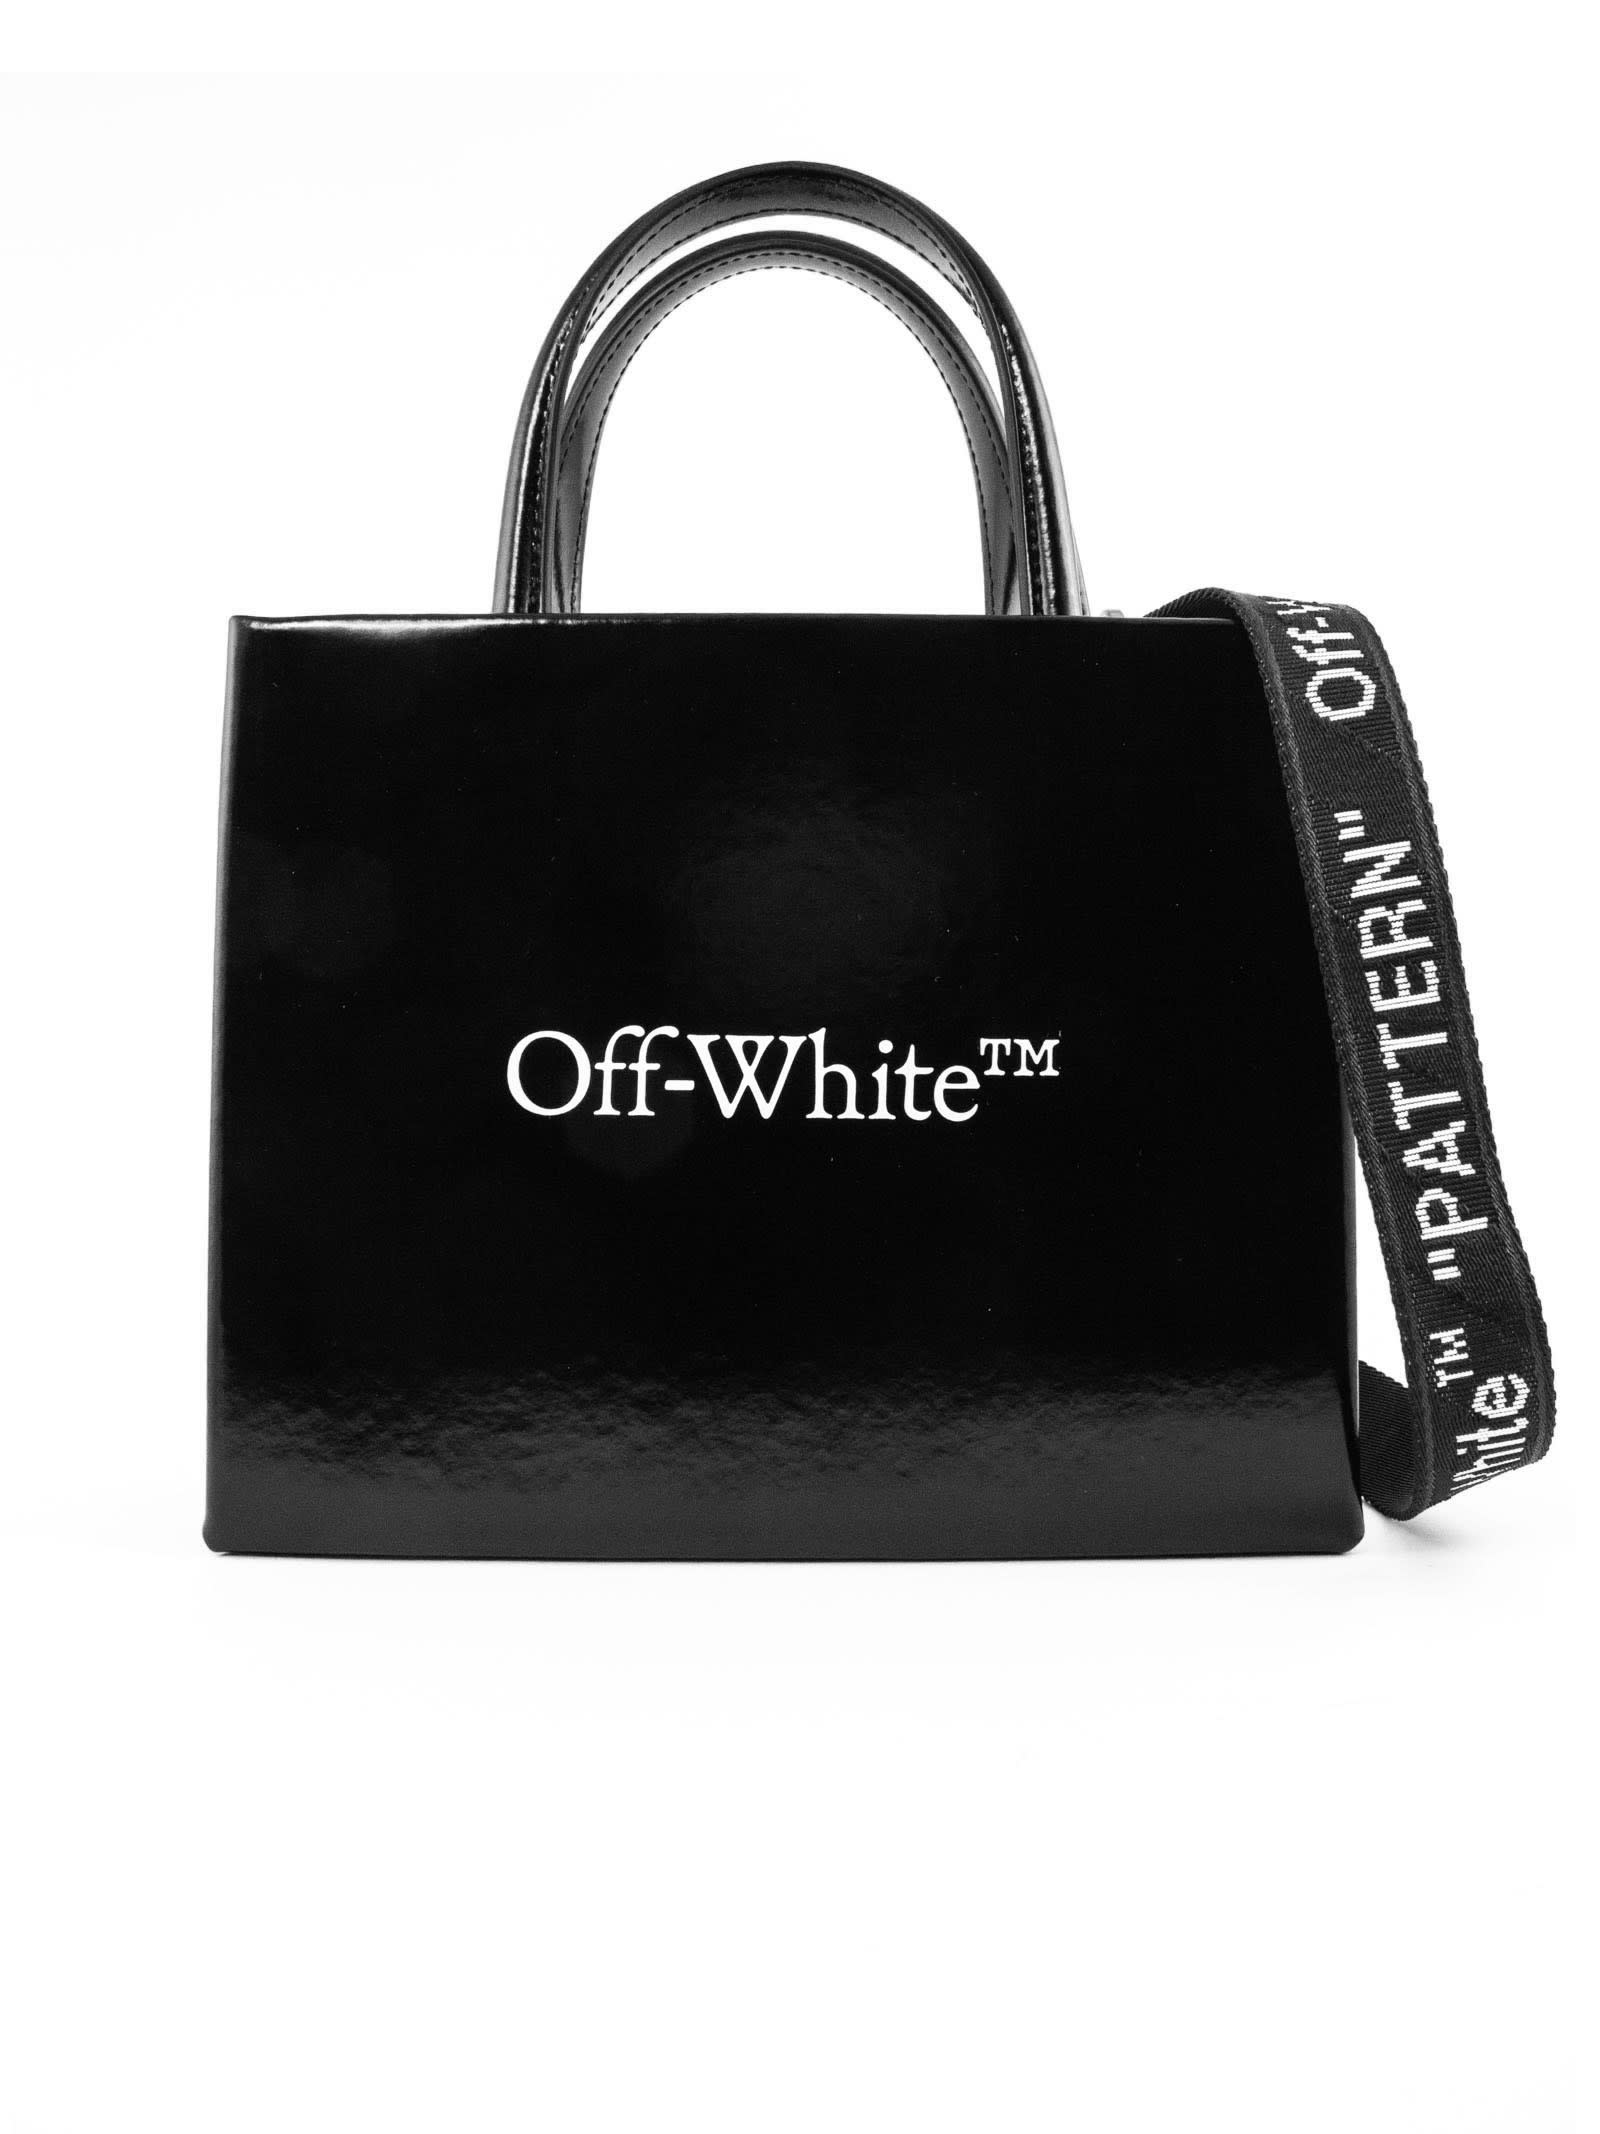 Off-White Black Box Handbag In Leather